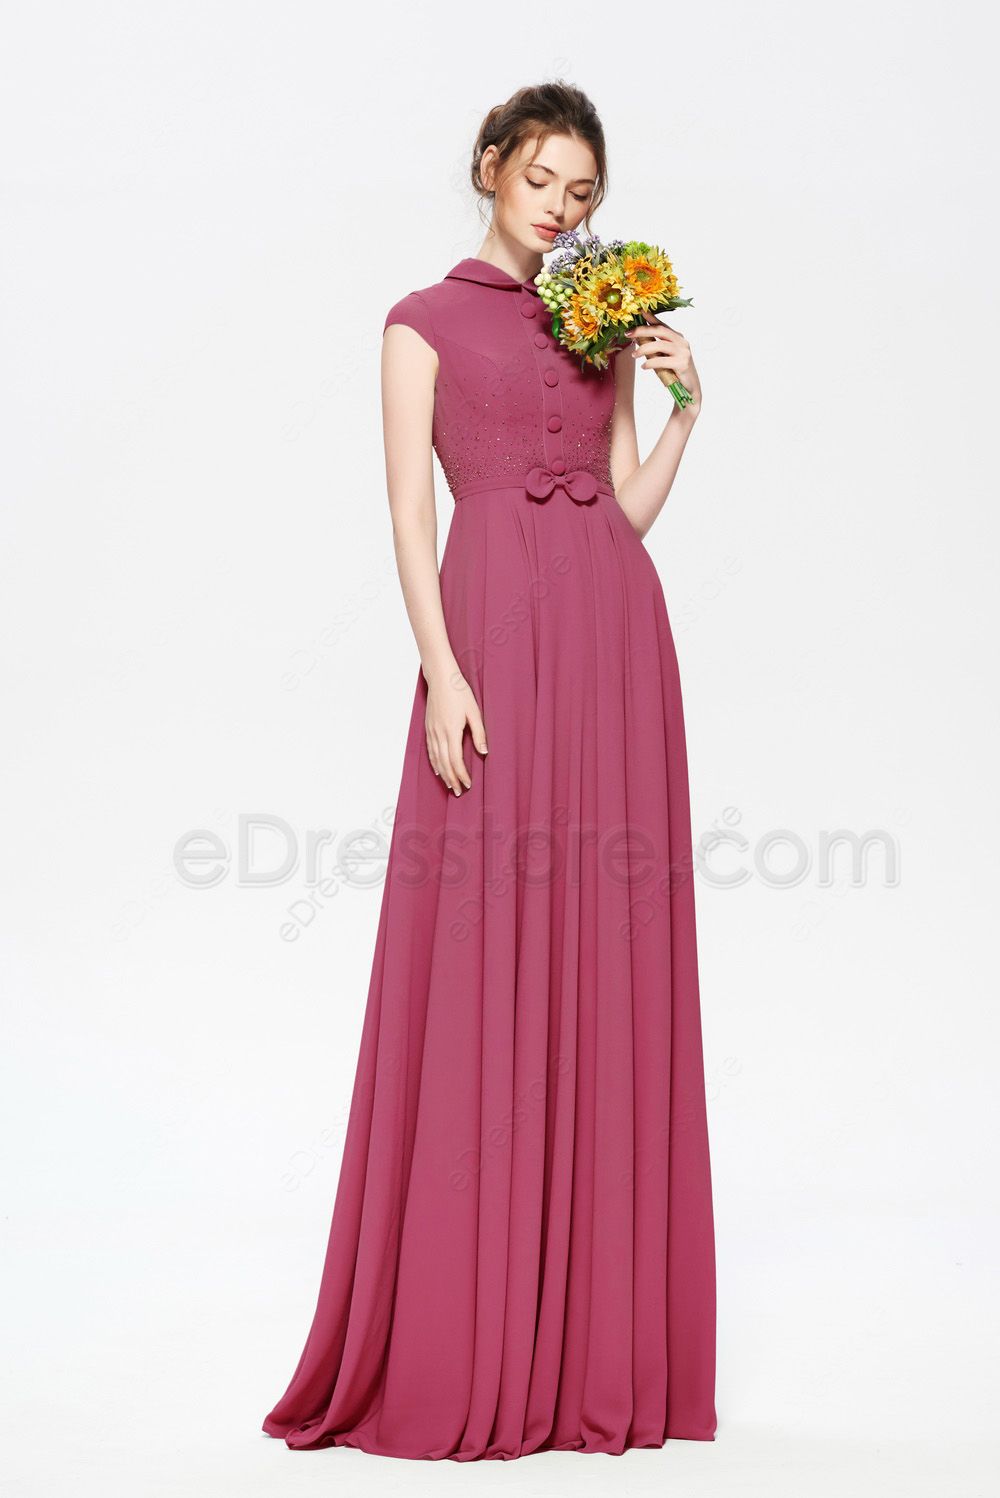 Modest Beaded Chianti Rose Bridesmaid Dresses Cap Sleeves | eDresstore